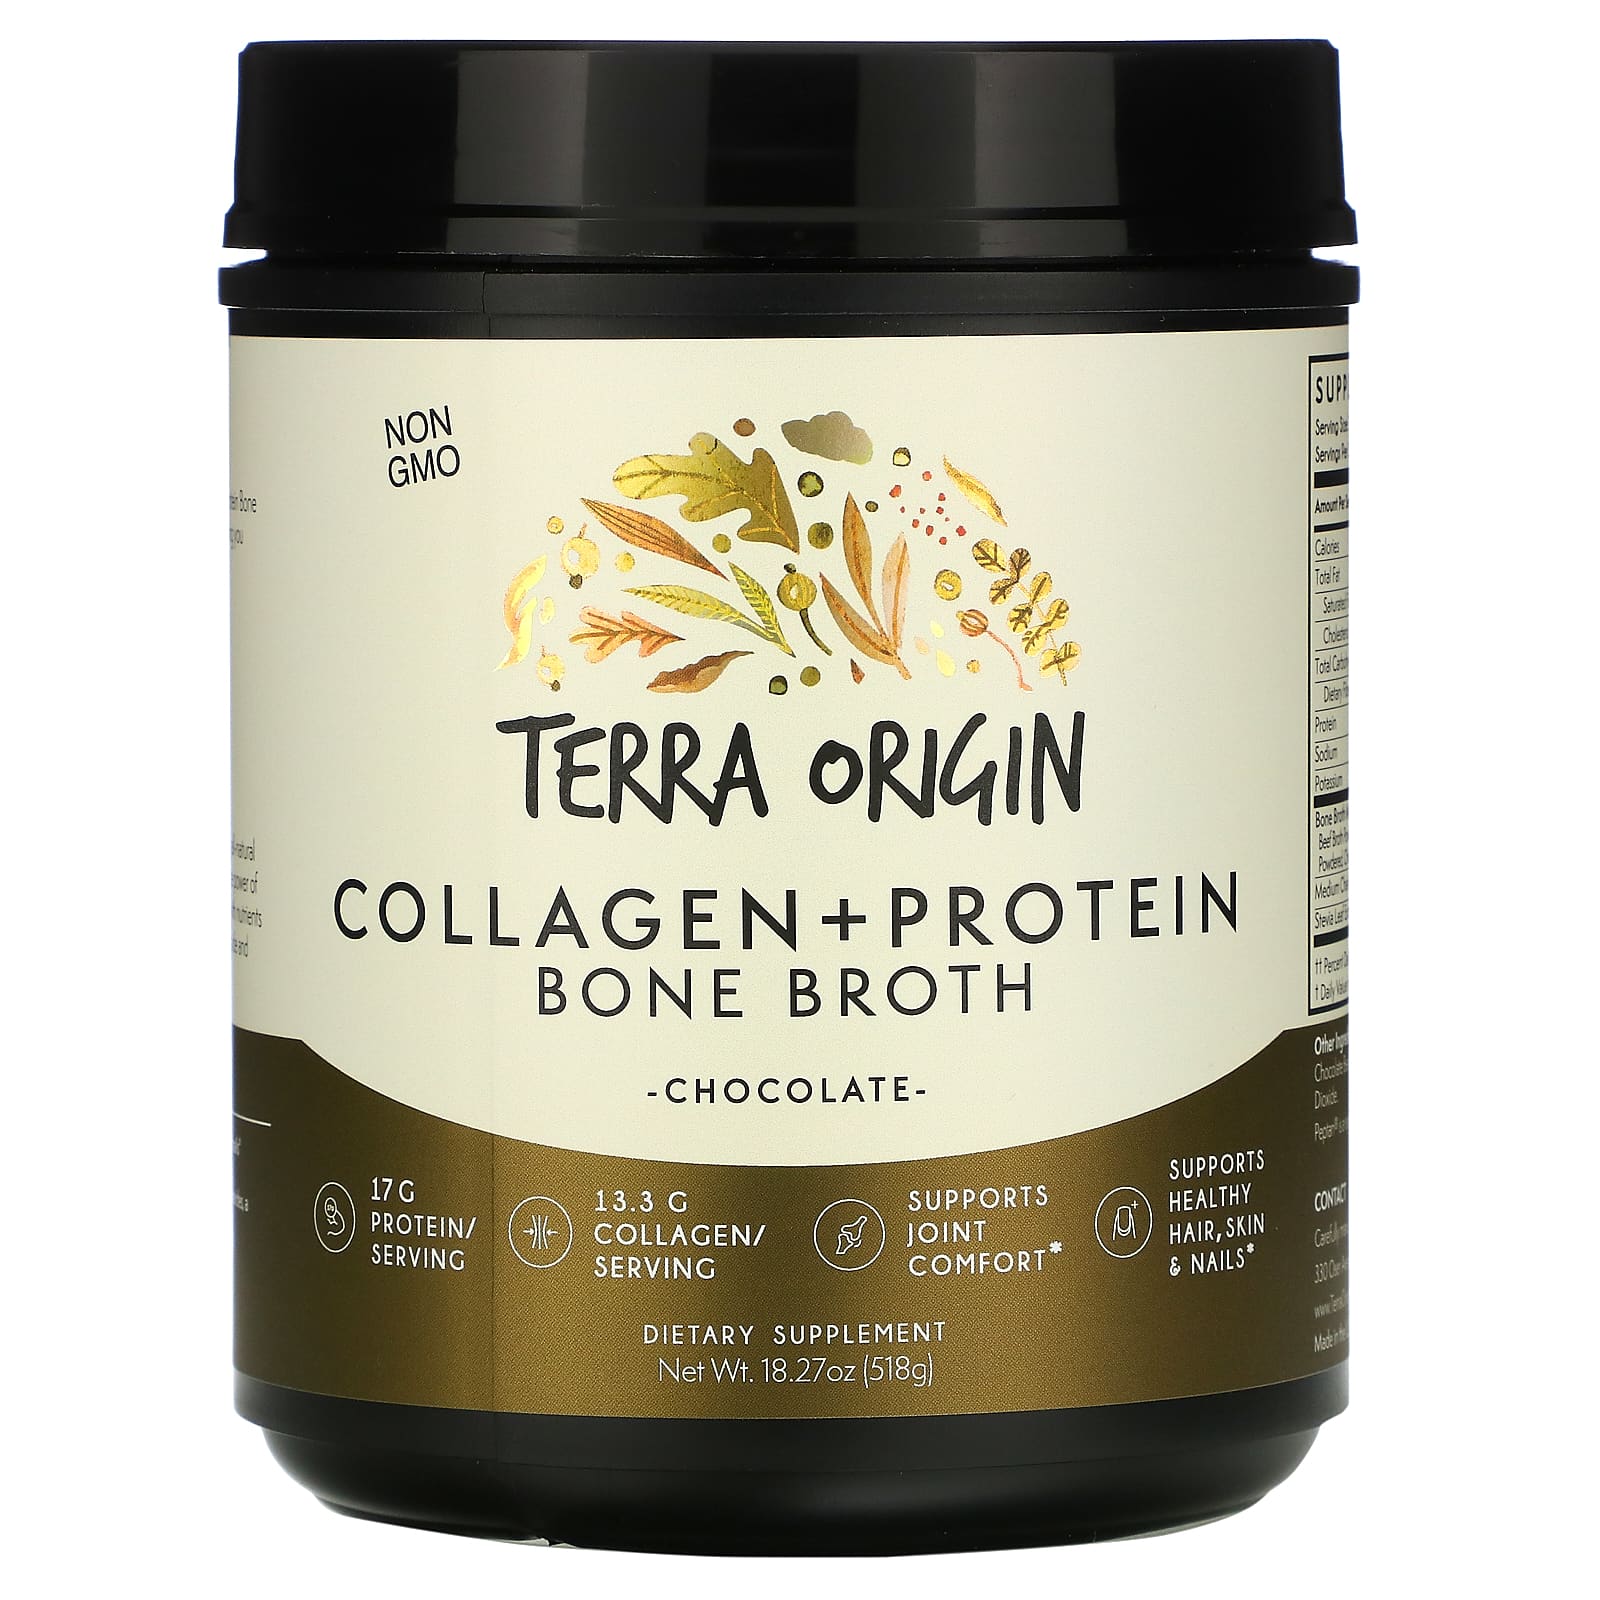 Terra Origin Collagen +Protein Bone Broth Chocolate 18.9 oz (536 g) фотографии